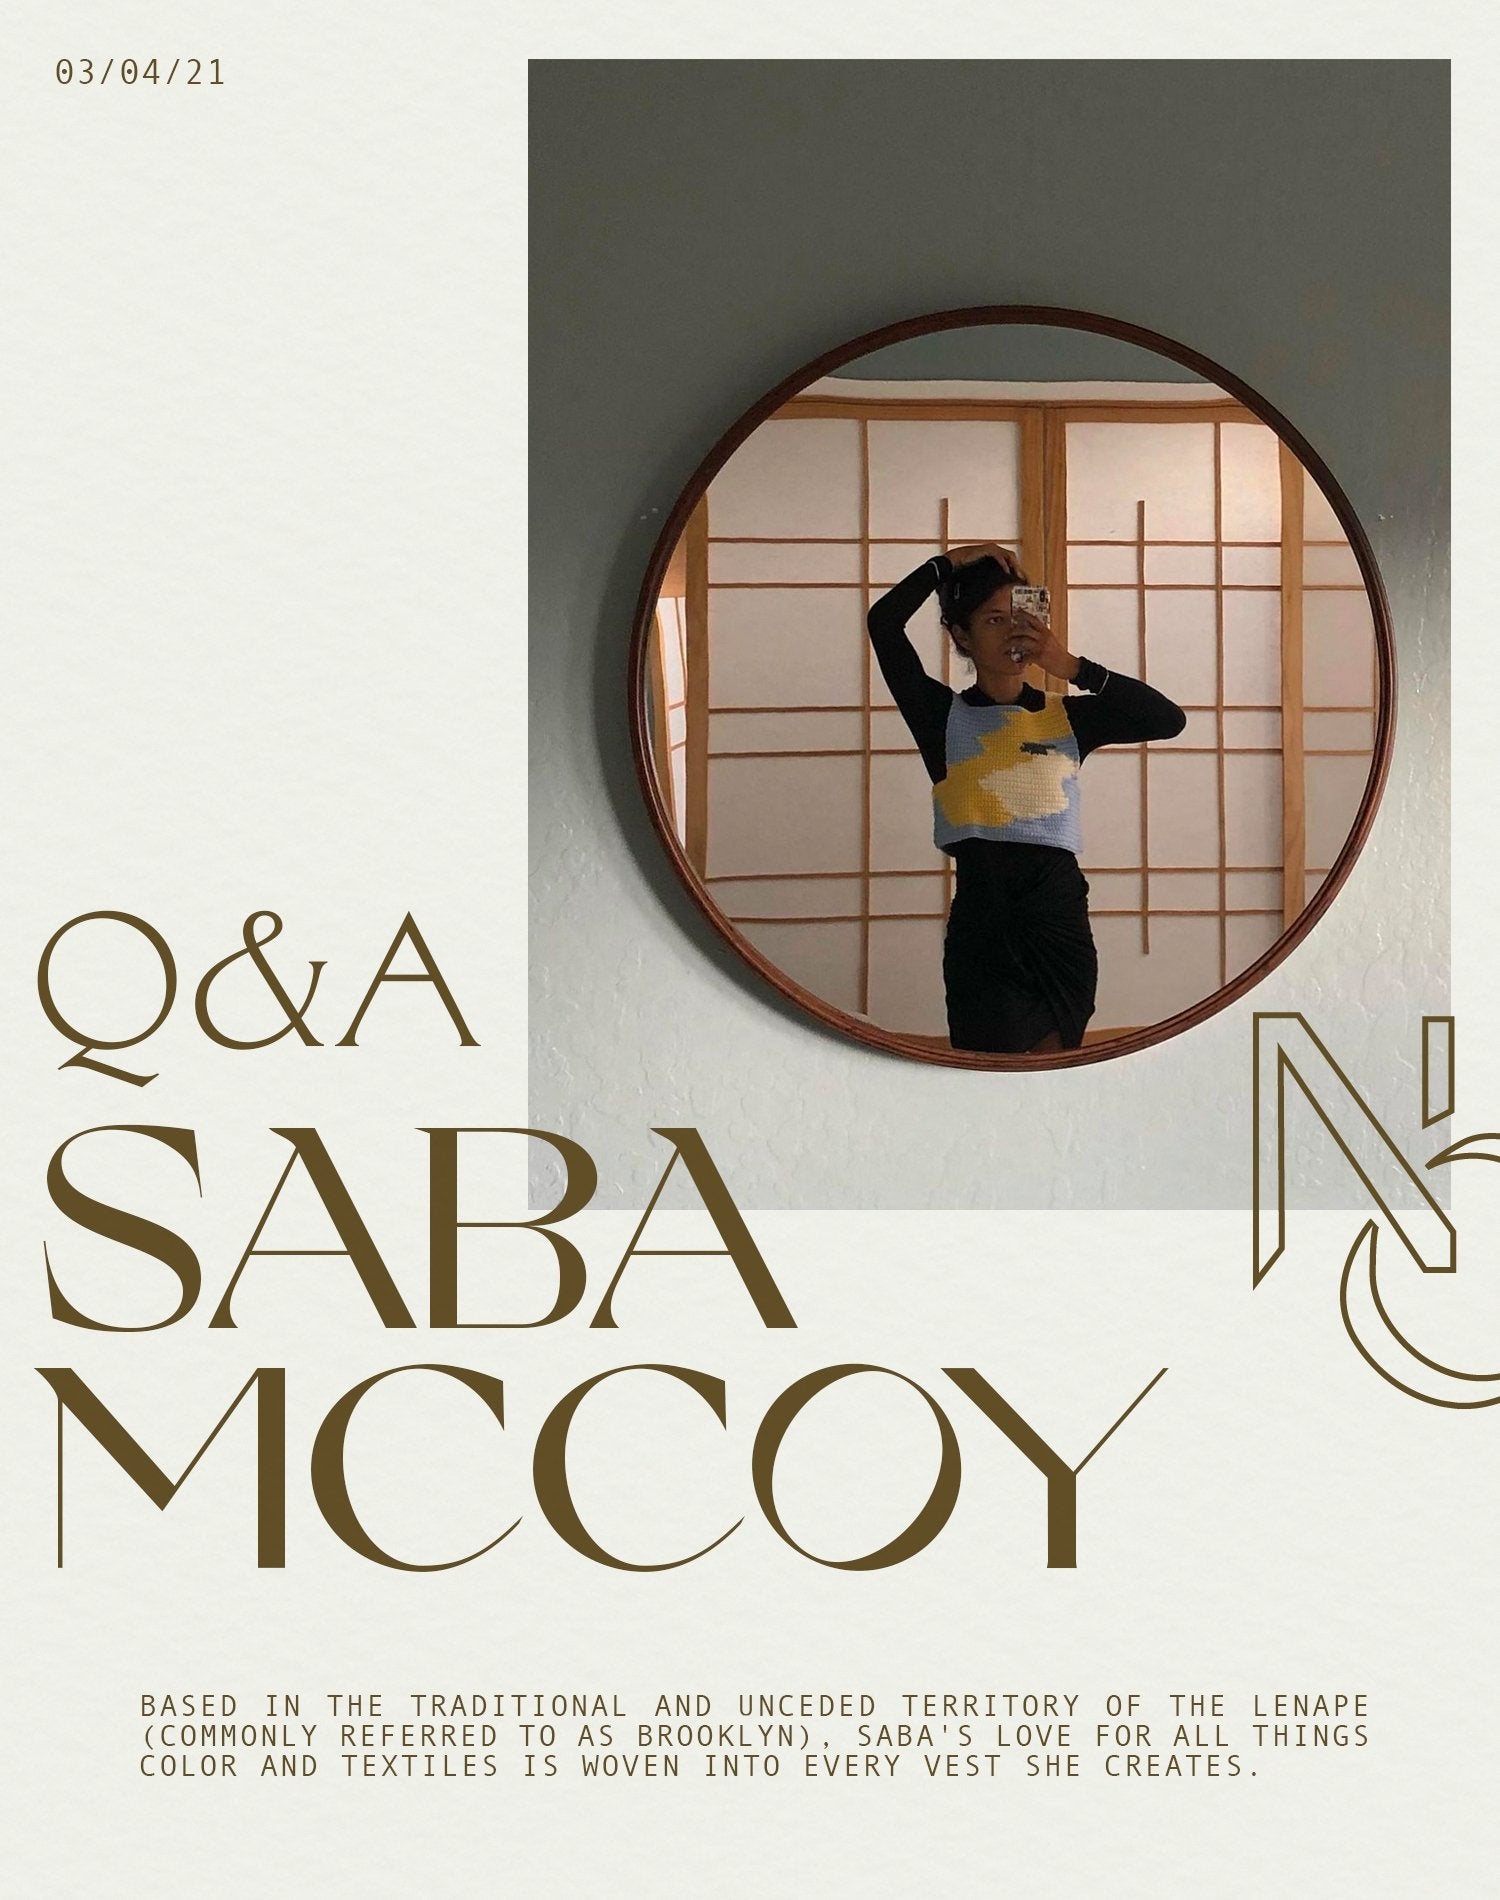 Q&A • Saba McCoy